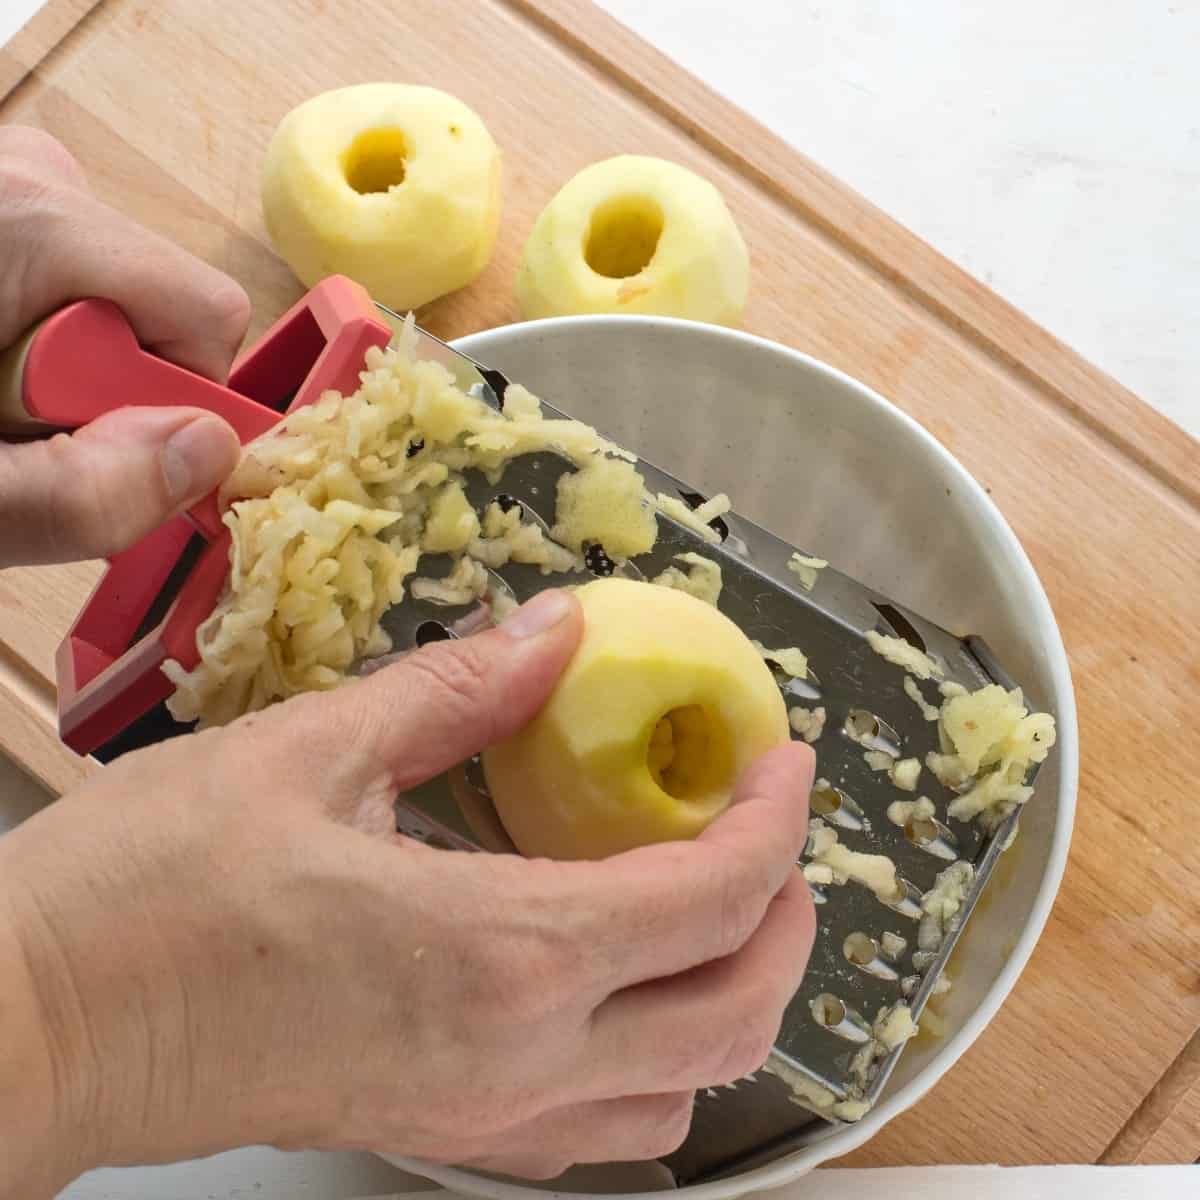 Shredding apples on a hand grater box.